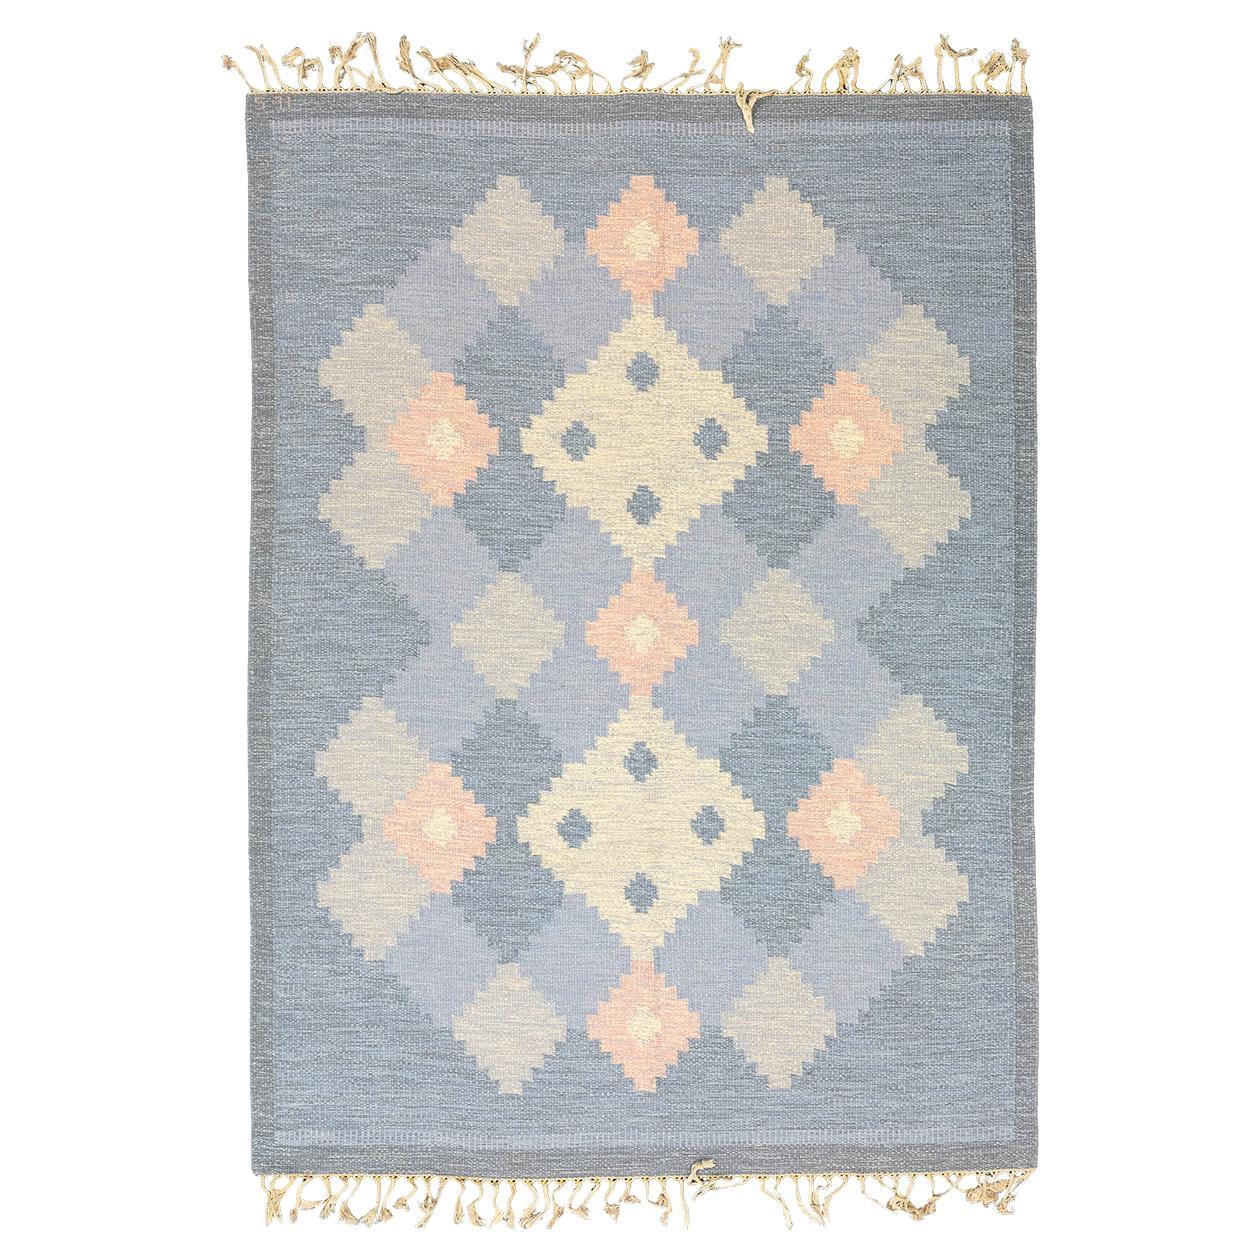 Scandinavian Carpet Rollakan Swedish Abstract Design Soft Color Palette For Sale